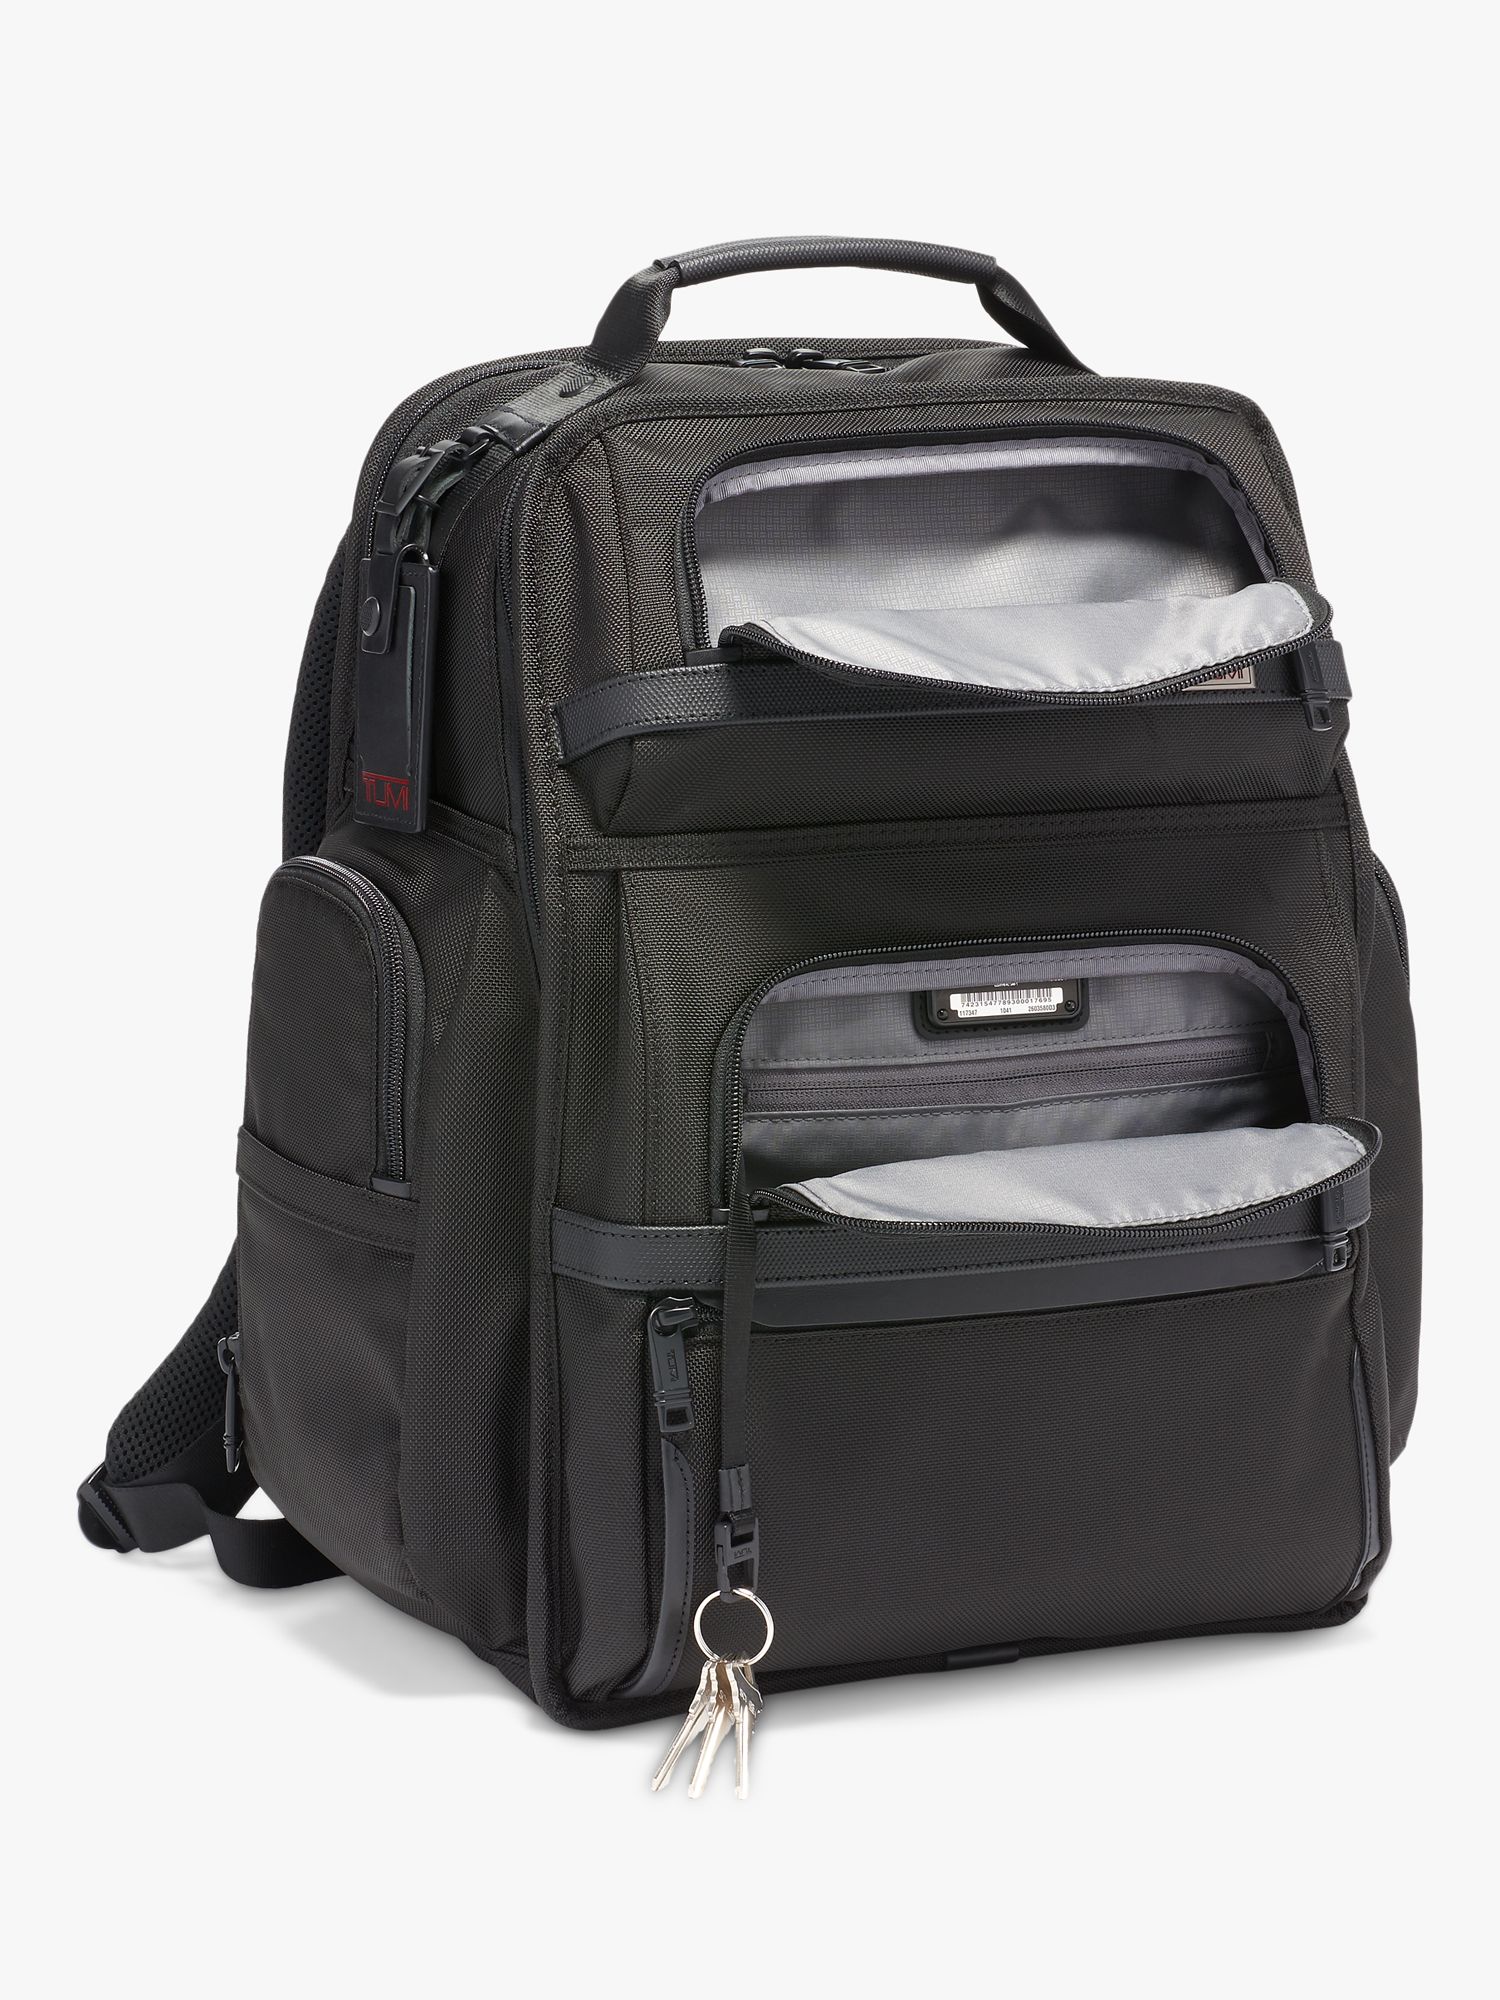 TUMI Alpha 3 Brief Pack Backpack, Black at John Lewis & Partners